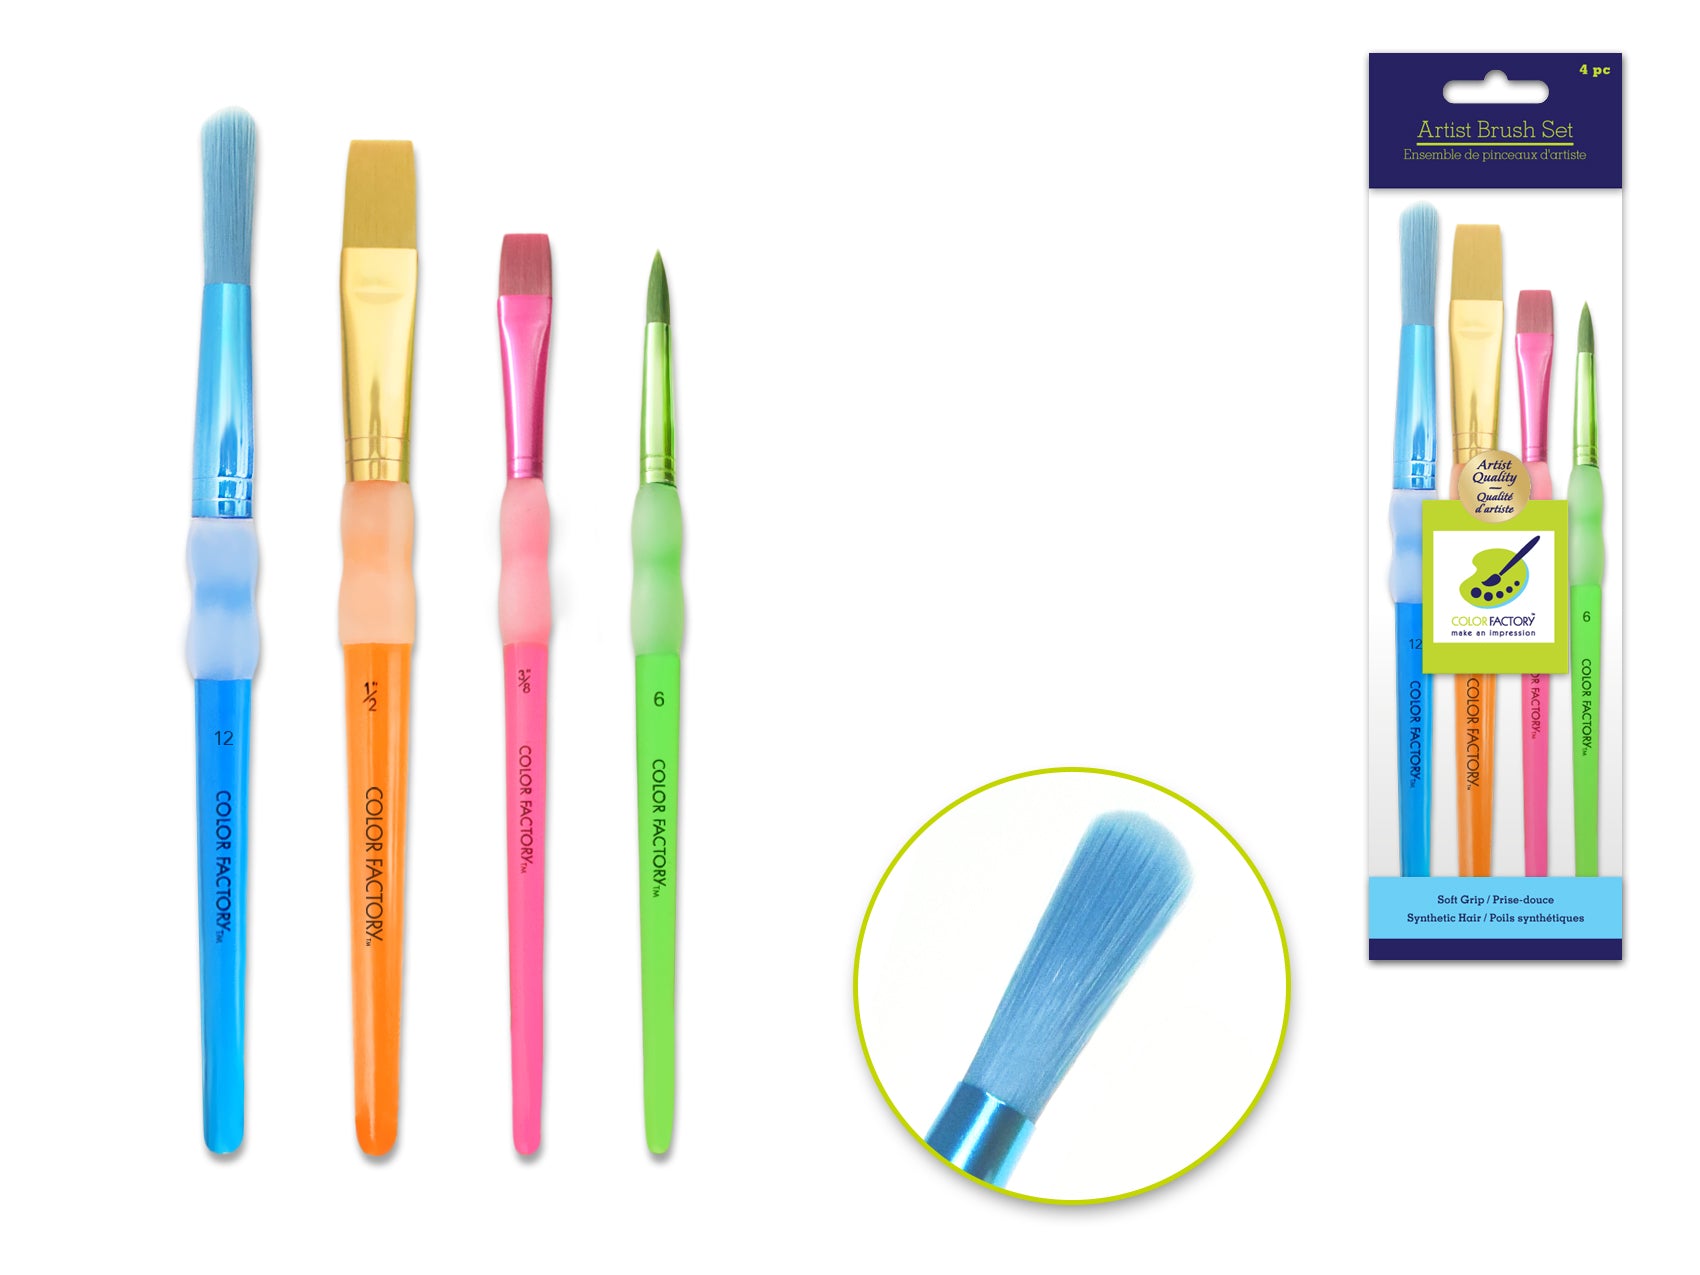 Artist Brush Set Featuring Color-Trend Soft-Grip and Quadruple Plastic Handles